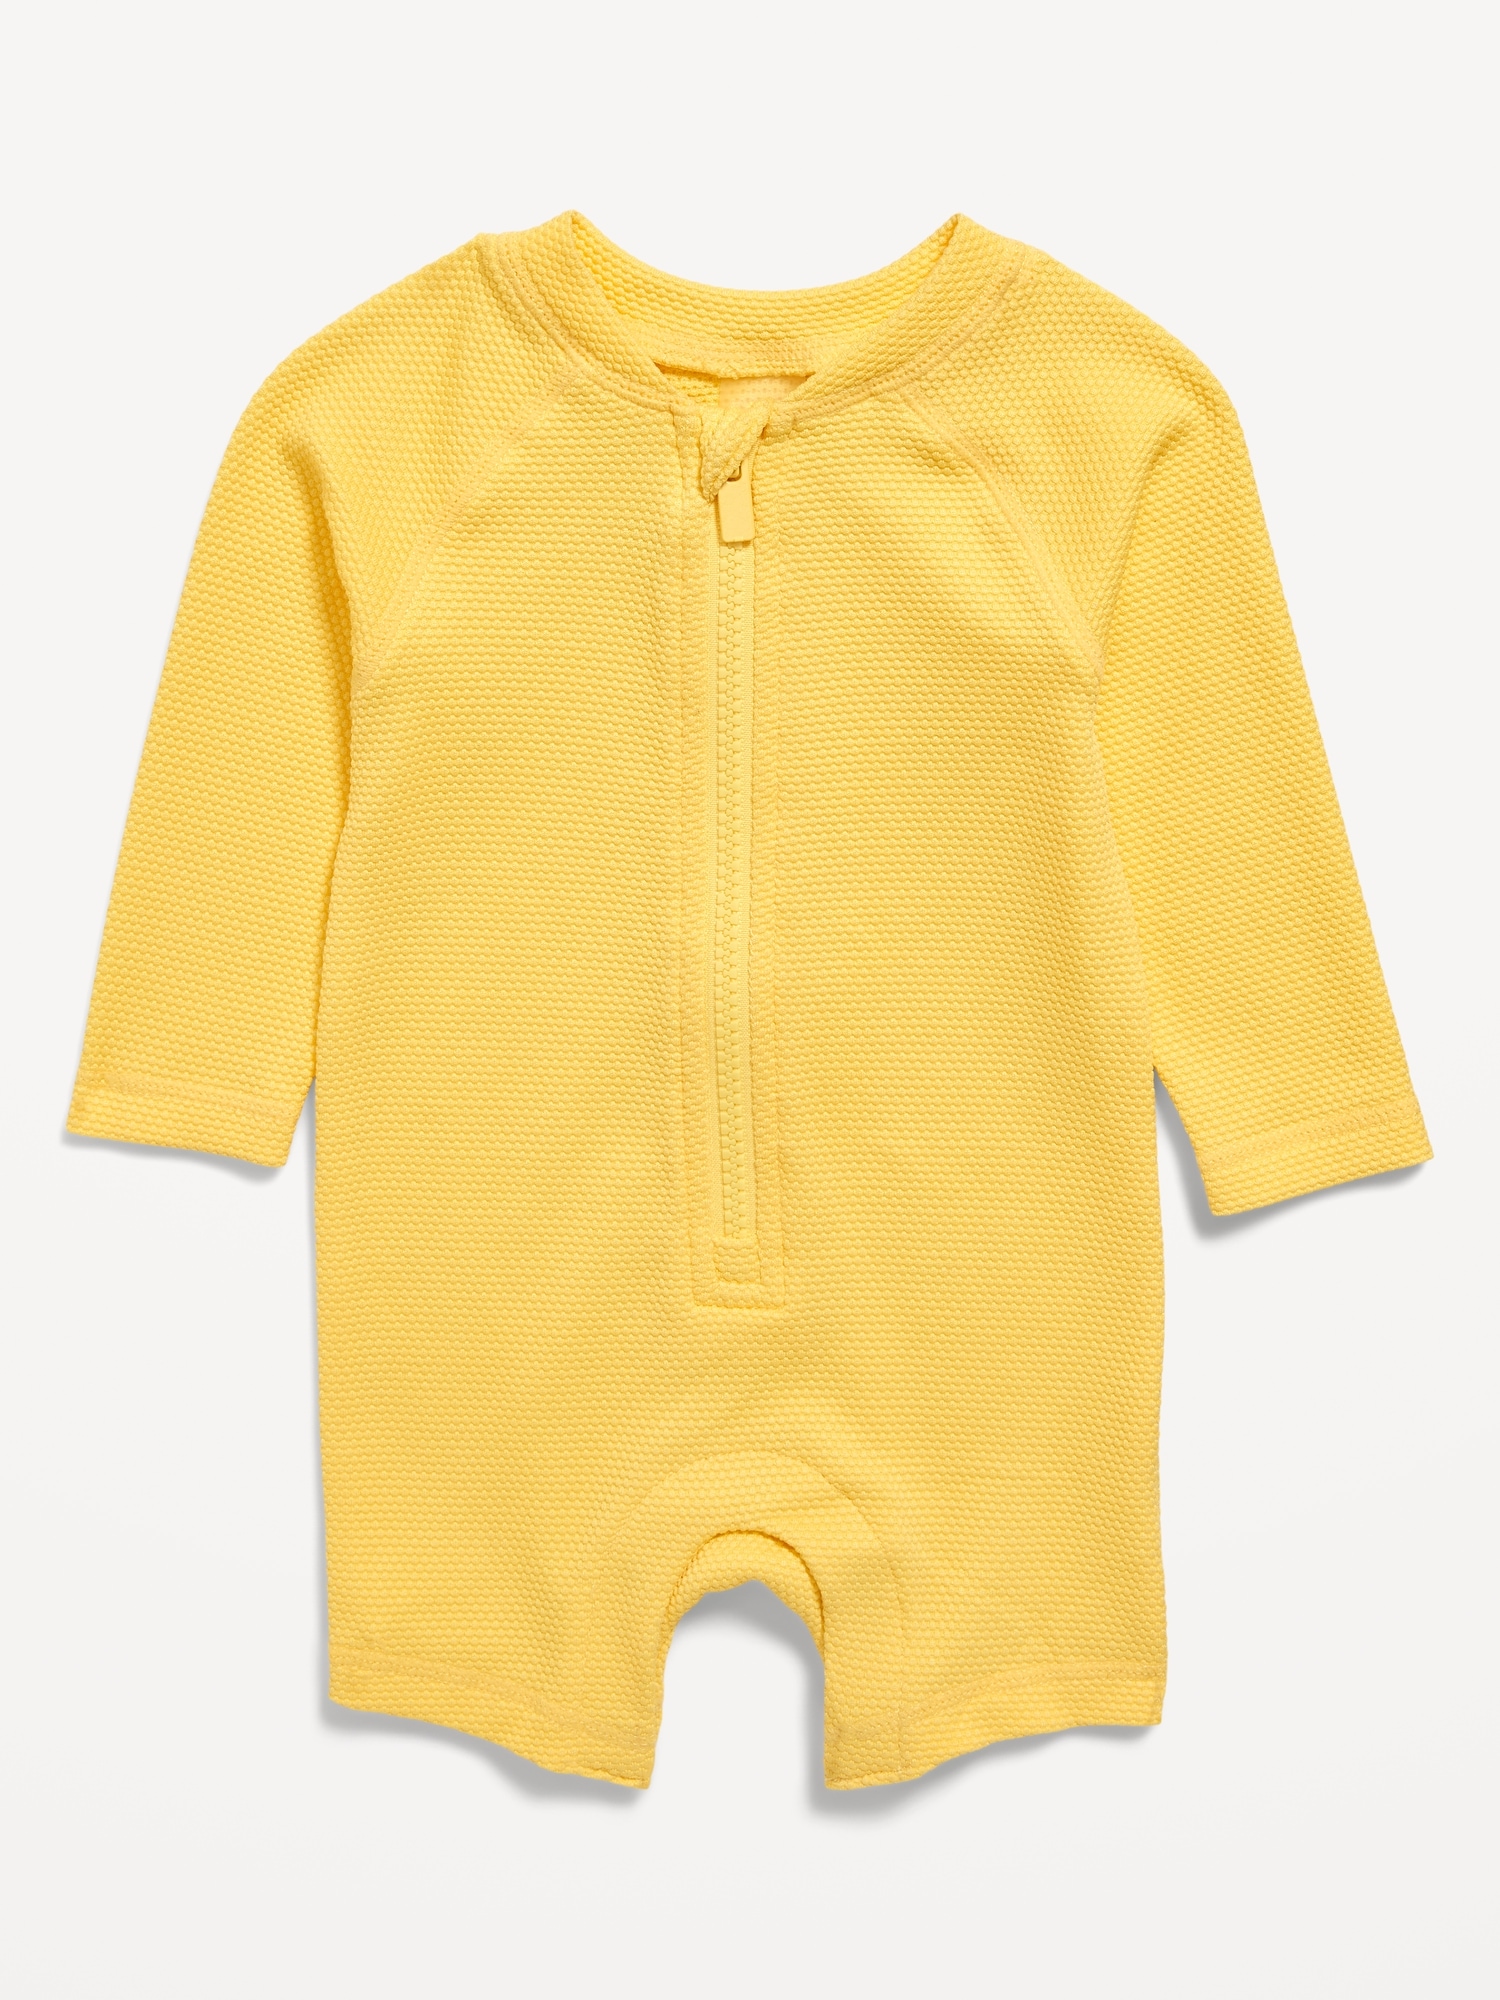 Unisex Printed Long-Sleeve Swim Rashguard Bodysuit for Baby Hot Deal